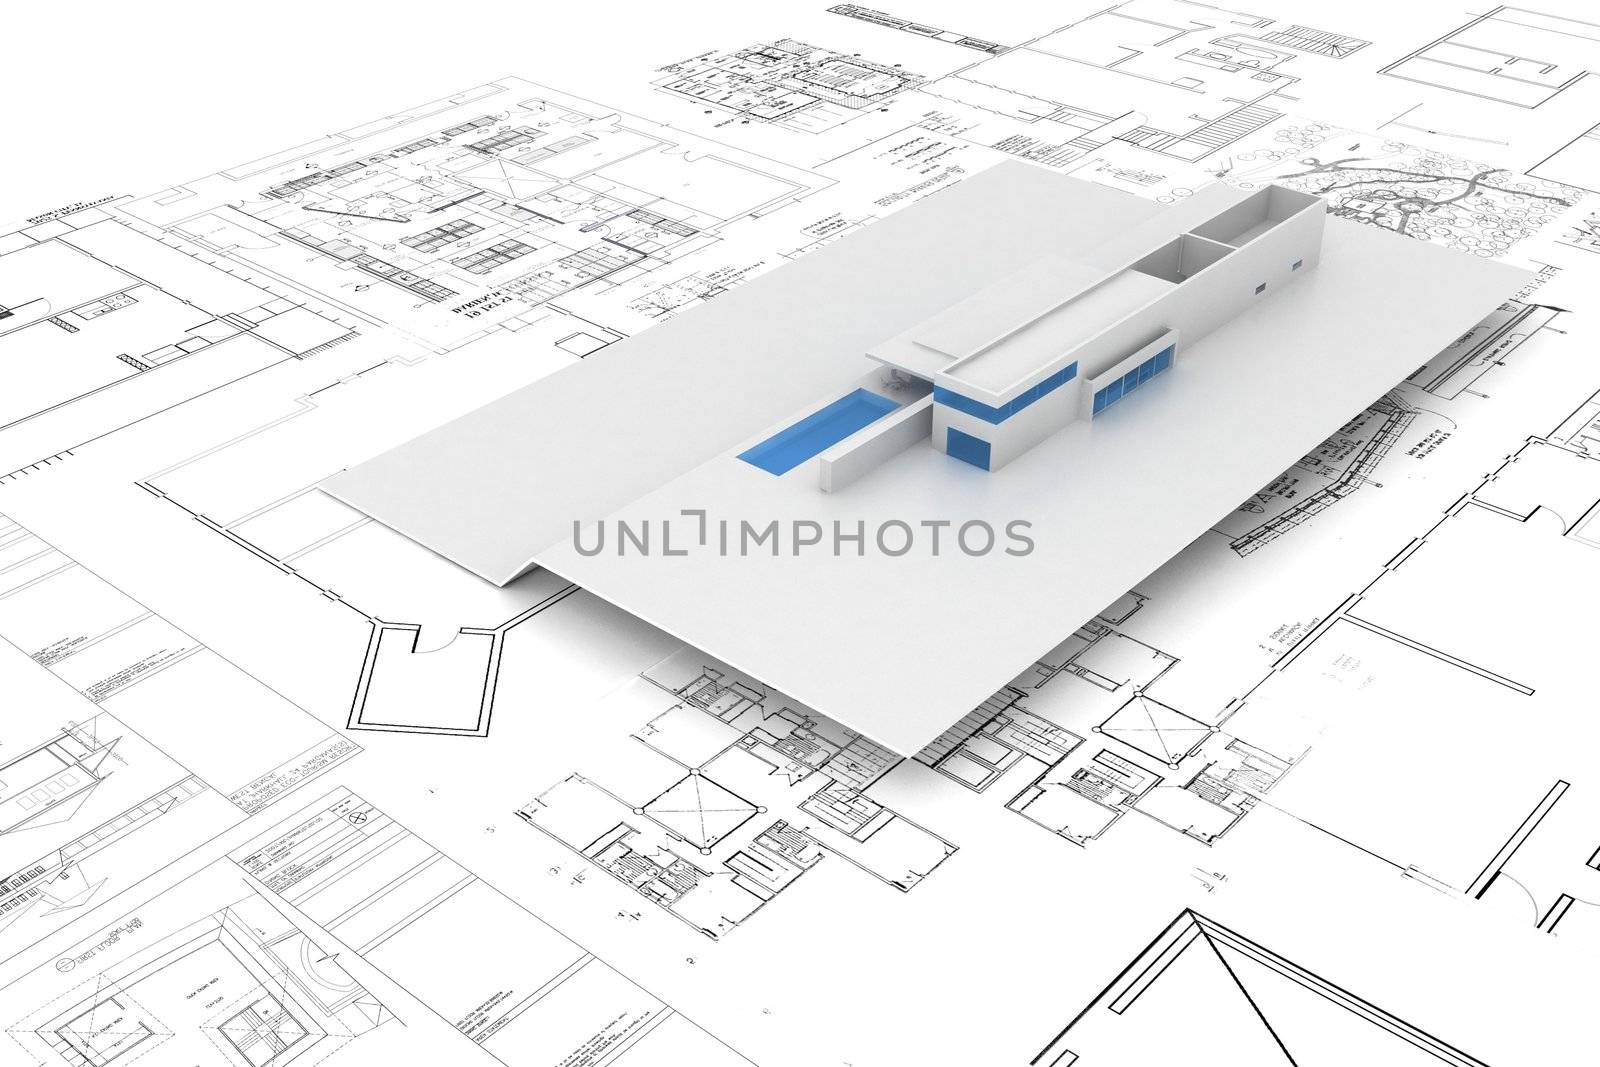 House maquette on top of architecture plans / blueprints